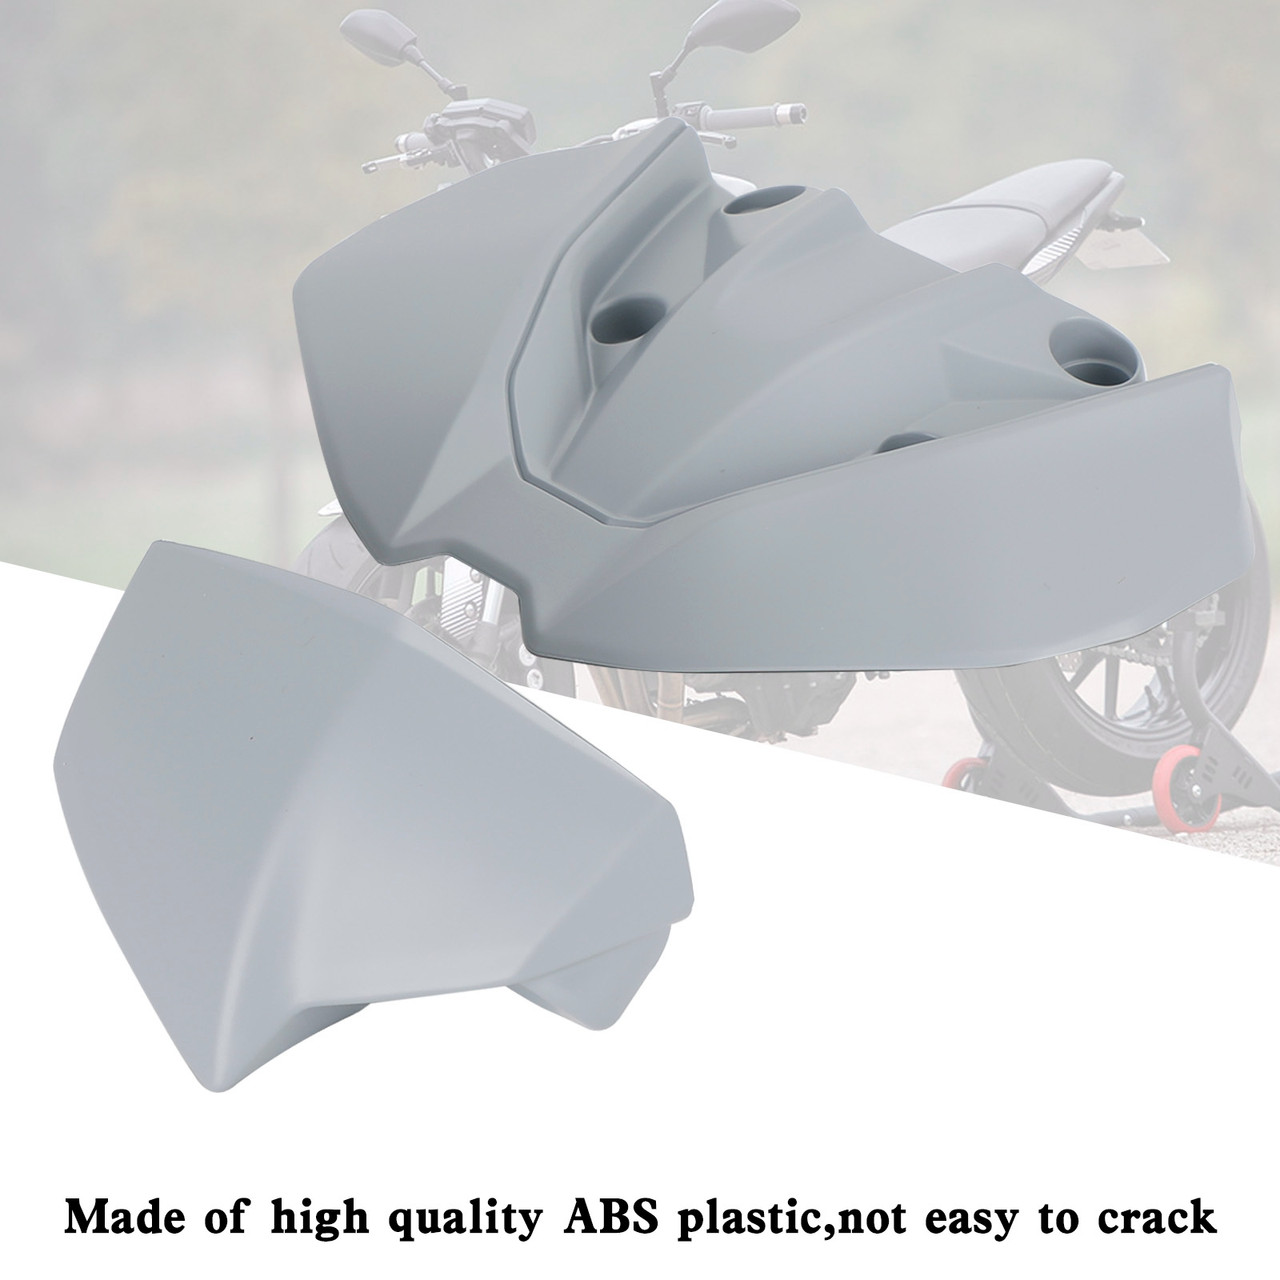 Headlight Fairing Windshield Cover For Yamaha MT-09 FZ09 MT-09 SP 2018-2020 GRA